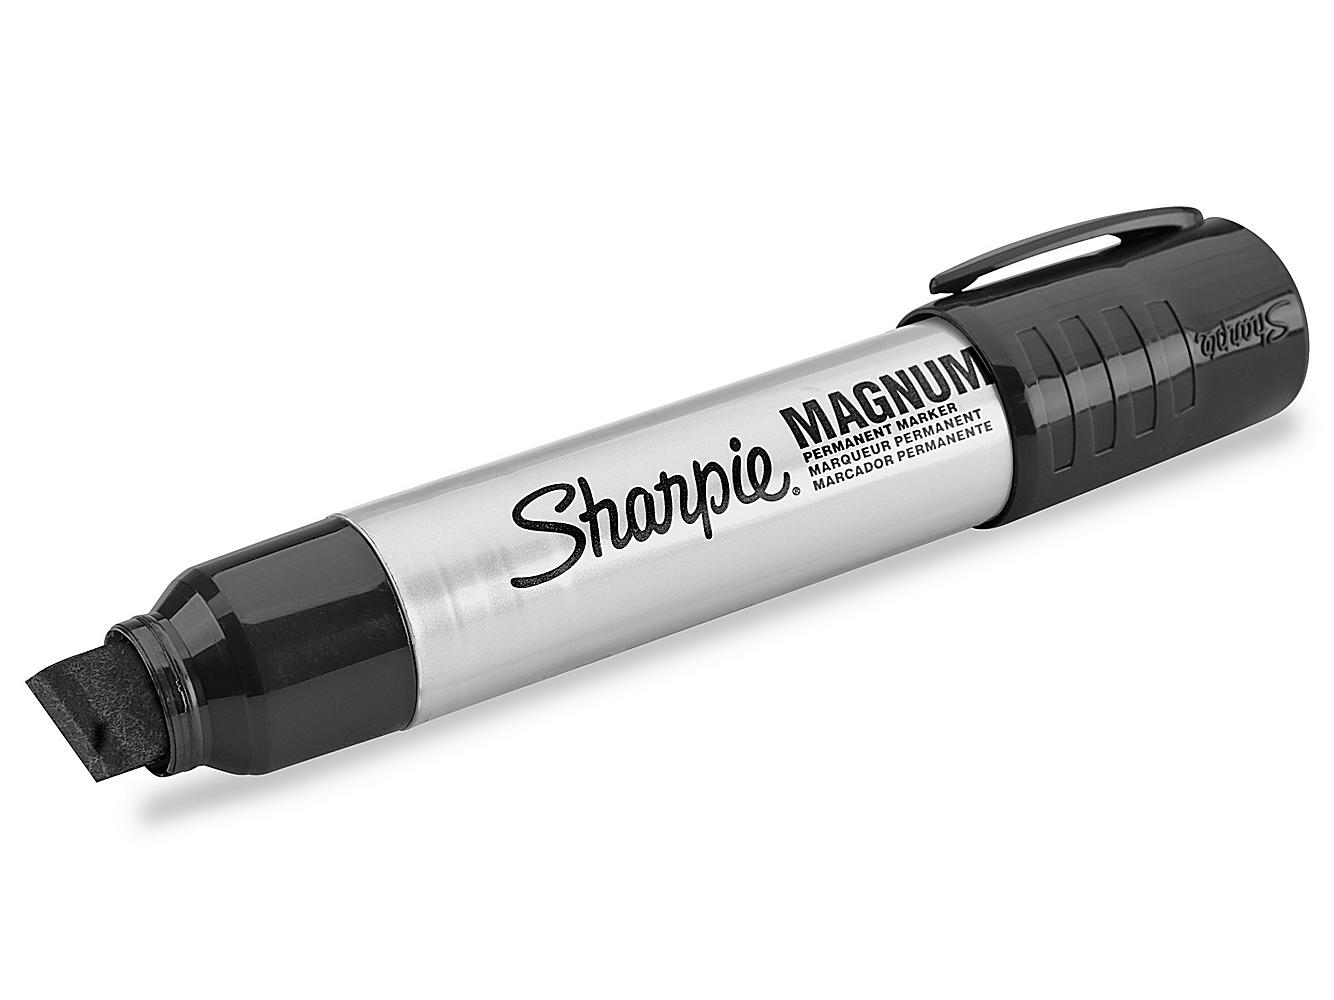 Sharpie Magnum Permanent Jumbo Chisel Ink Marker